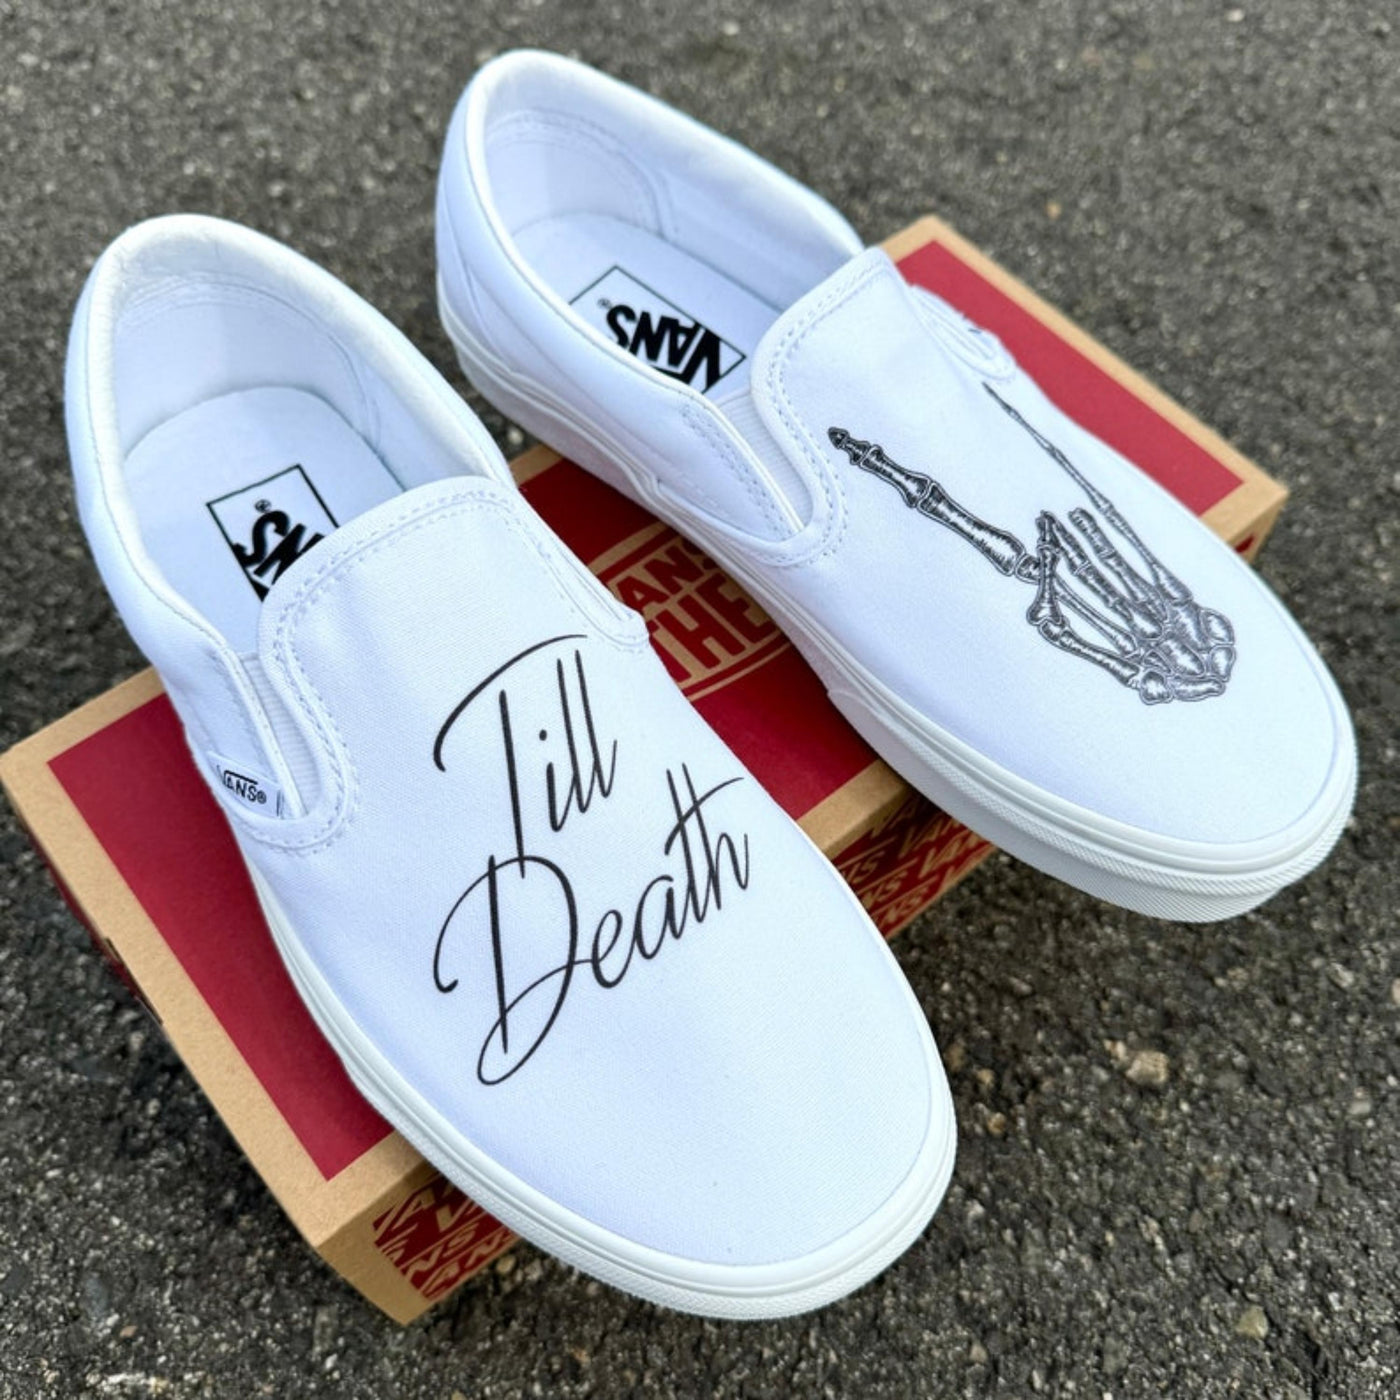 Till Death Wedding Vans Slip On Shoes